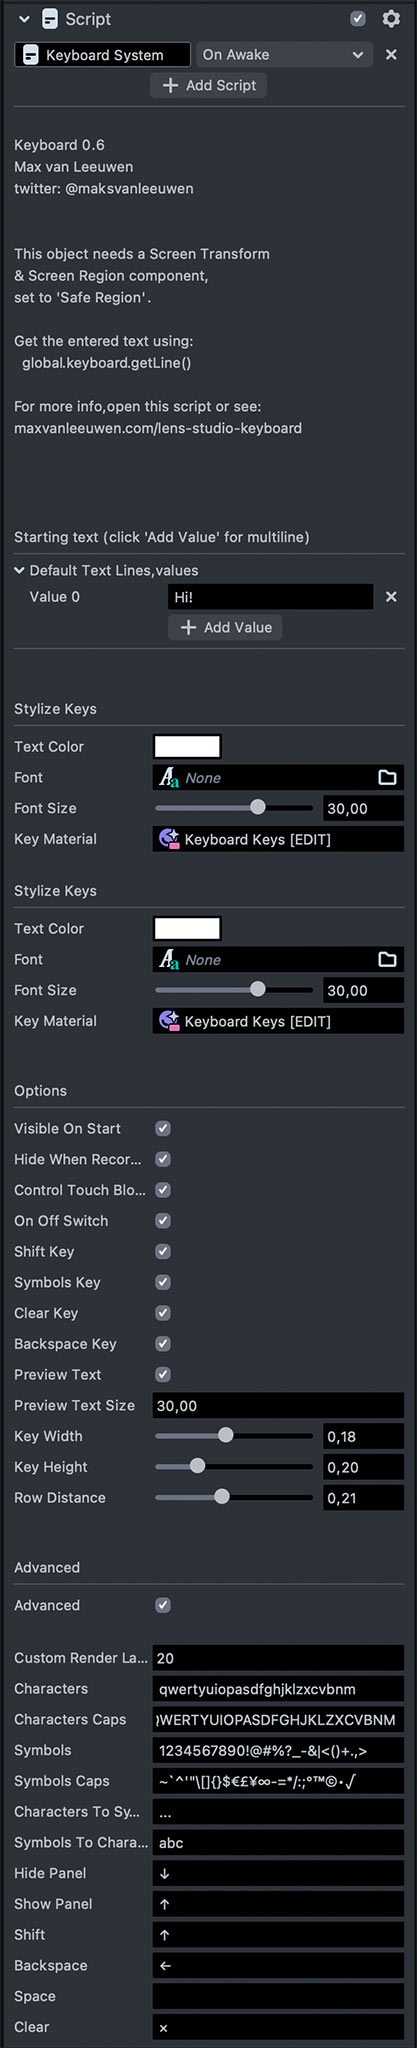 keyboard settings lens studio